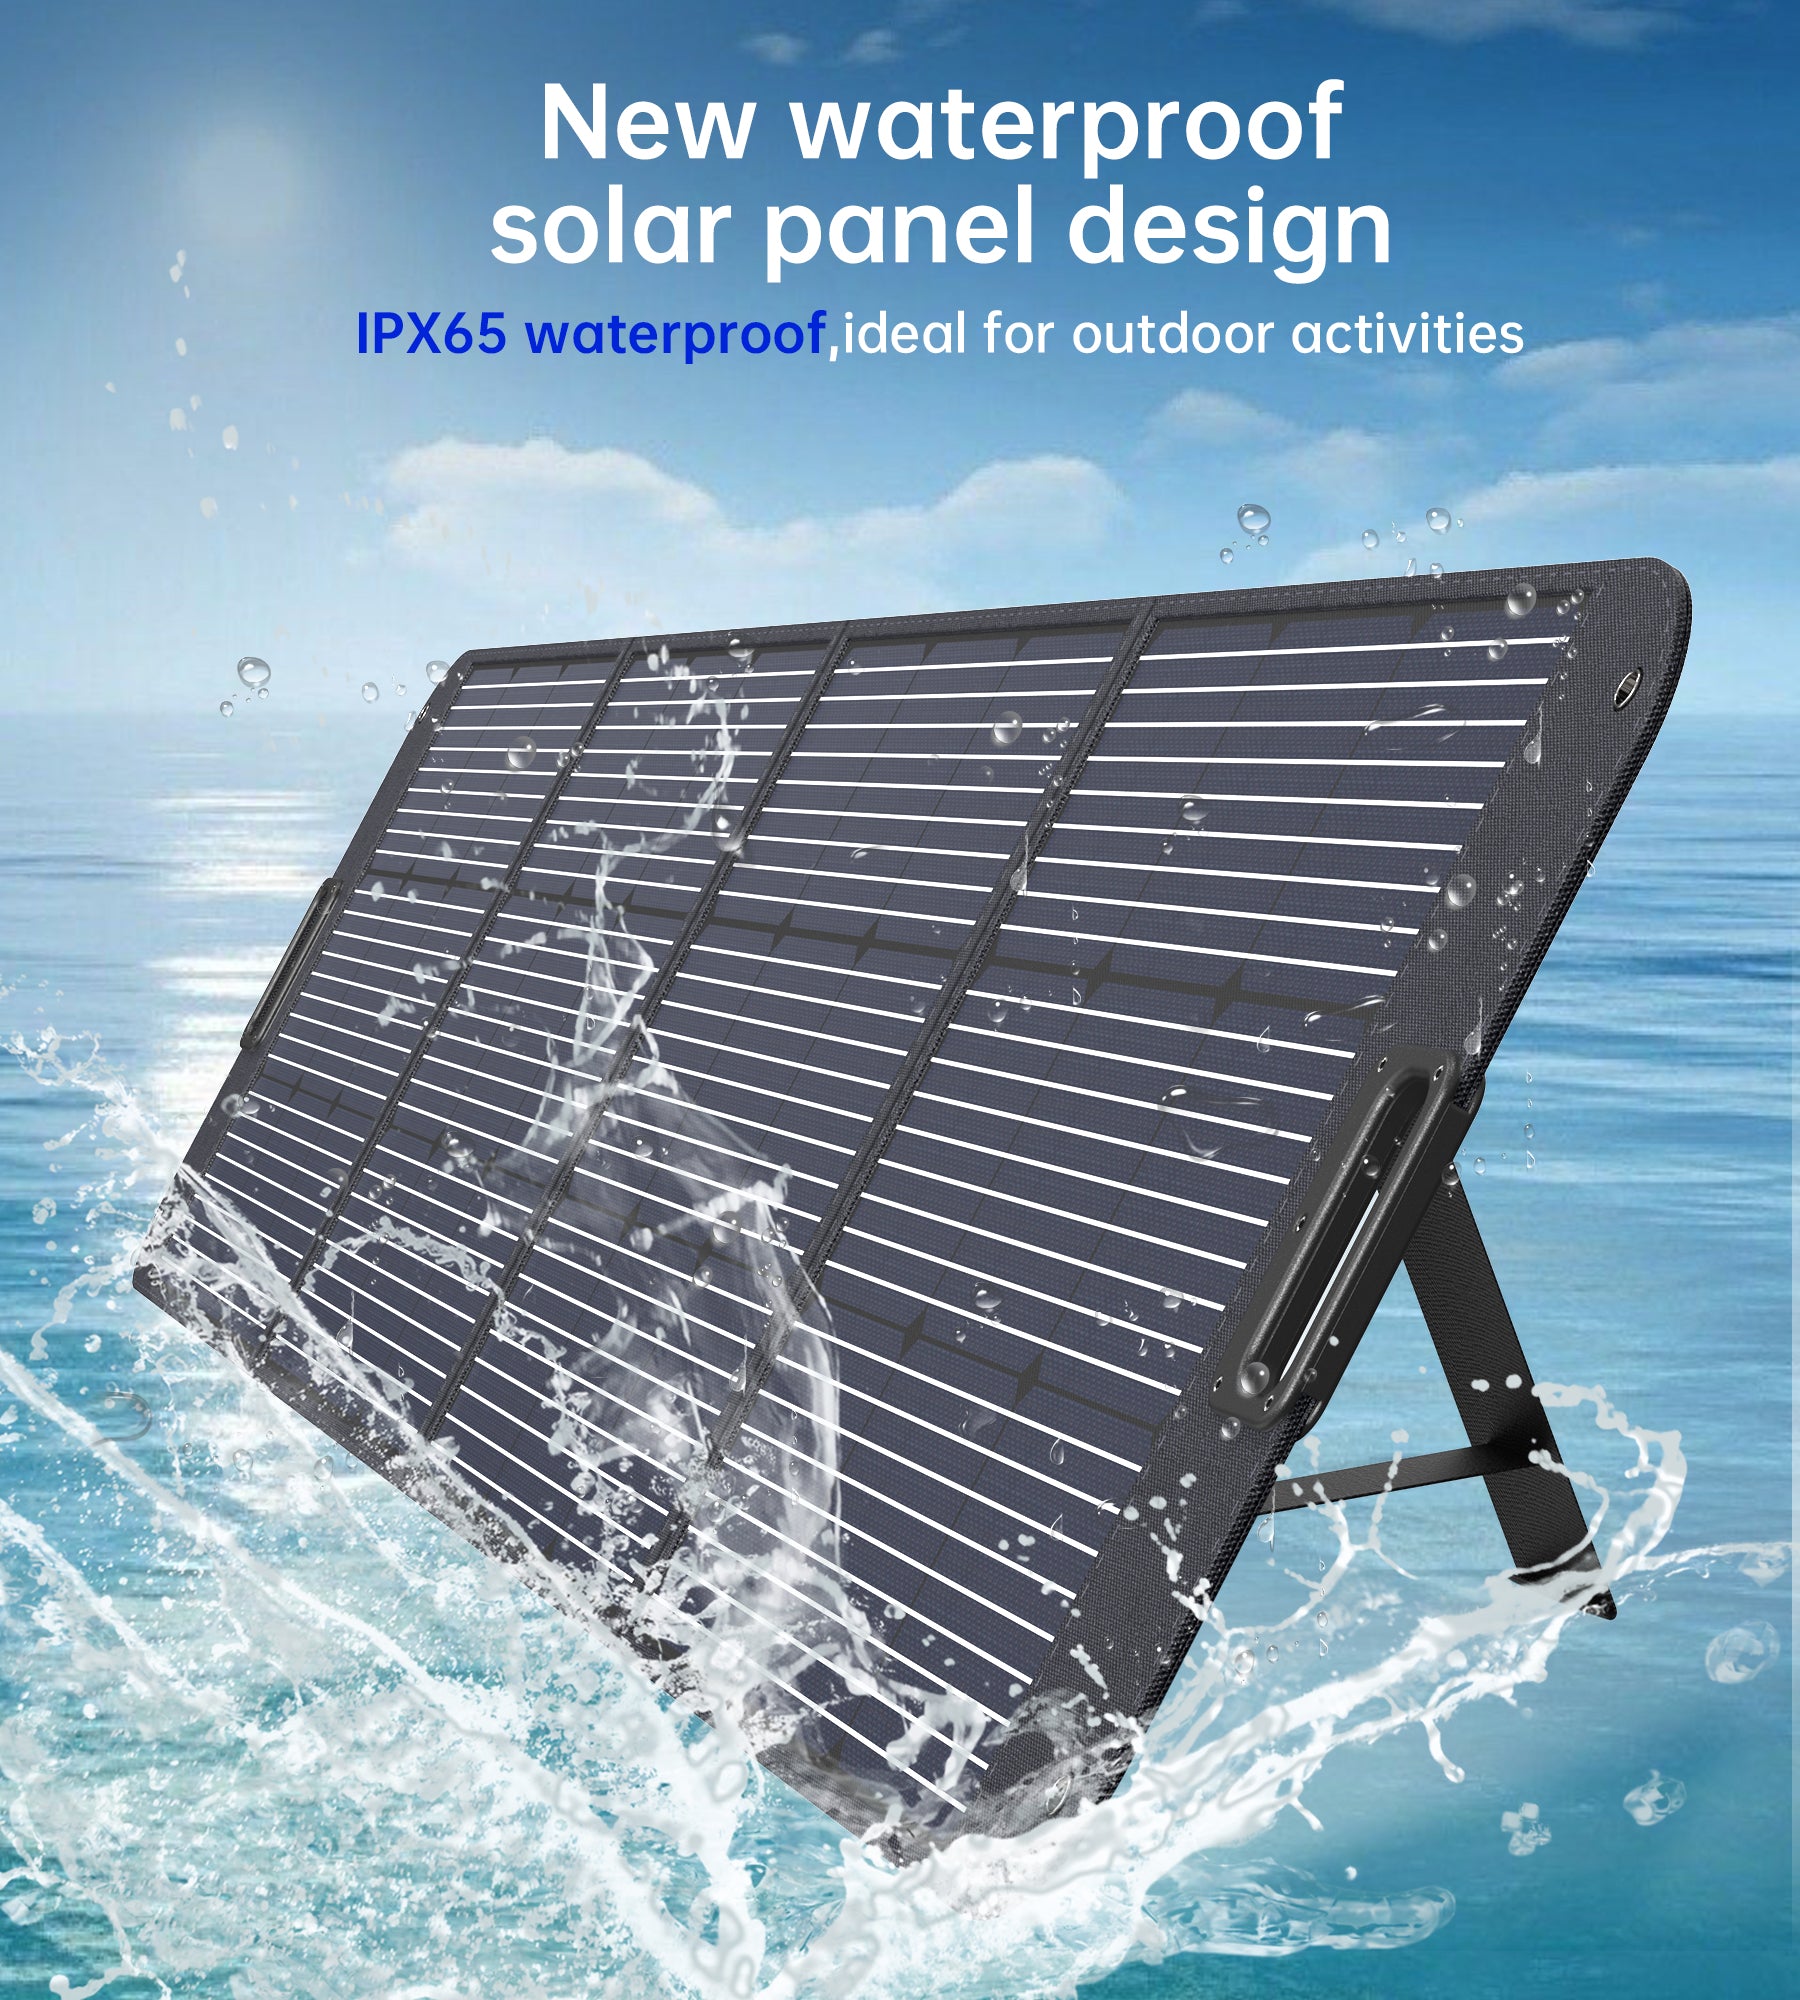 SC011 Choetech 200W Foldable Solar Charger